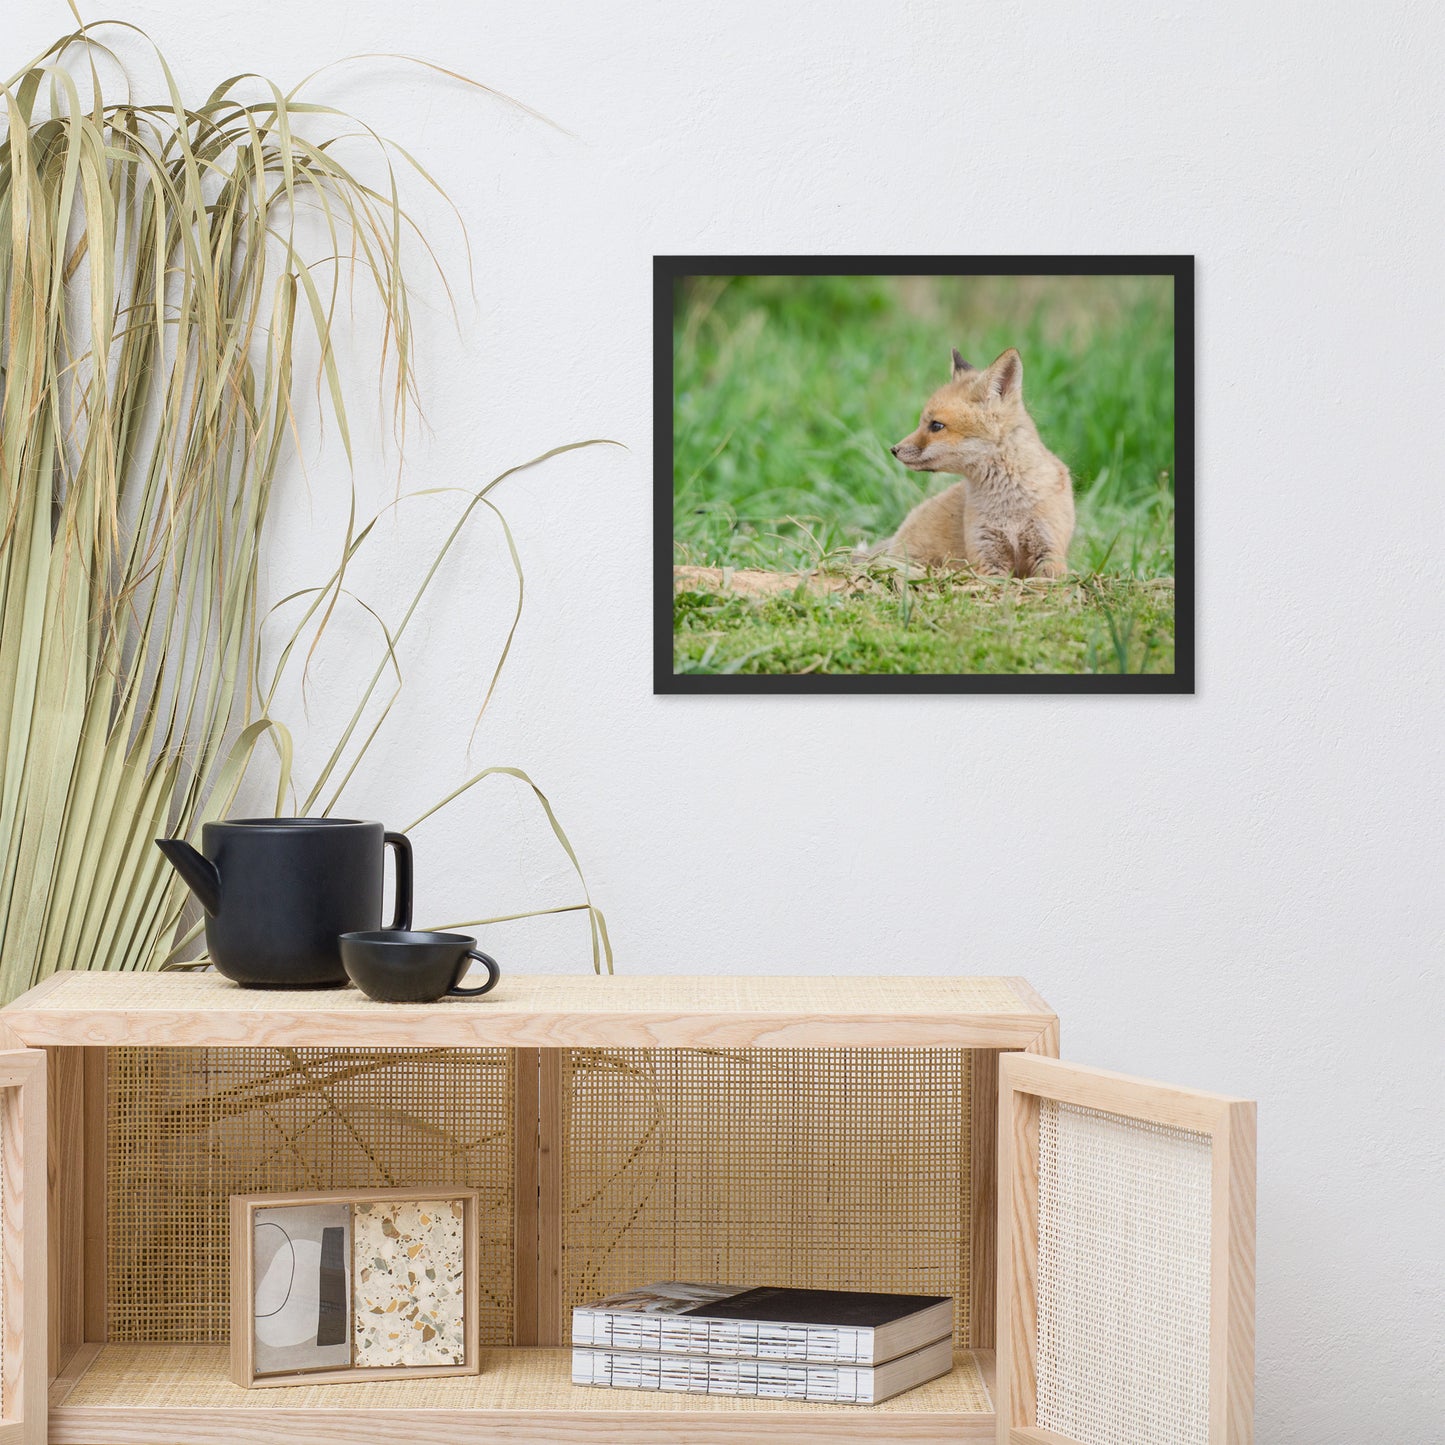 Framed Wildlife Wall Art: Red Fox Pups - Chilling/ Animal / Wildlife / Nature Photographic Artwork - Framed Artwork - Wall Decor